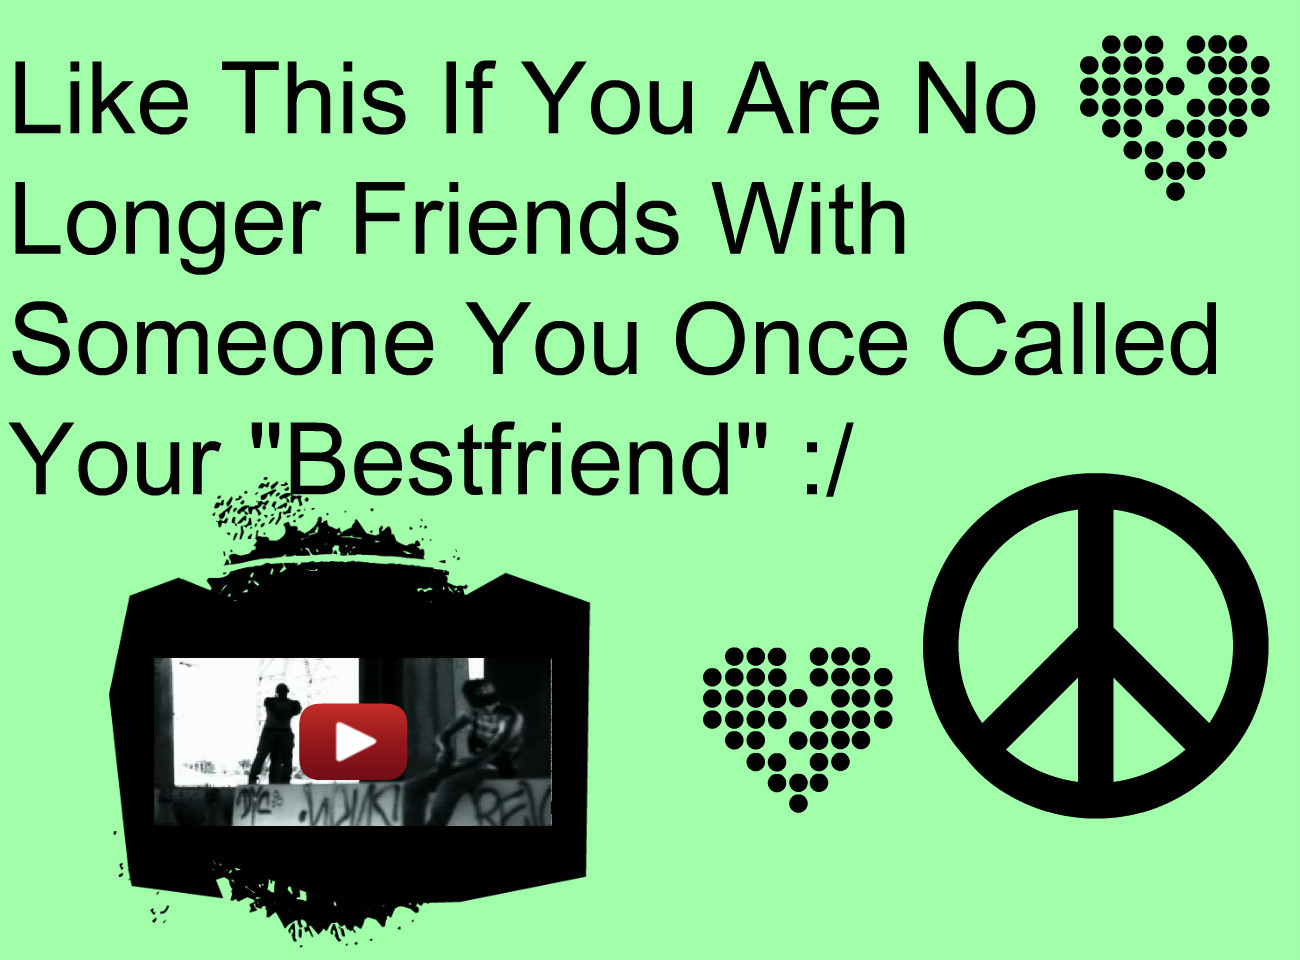 Best friend message. Ex friend quotes. Ex bestfriend quotes. Boddy your best friend игра. Message a friend.